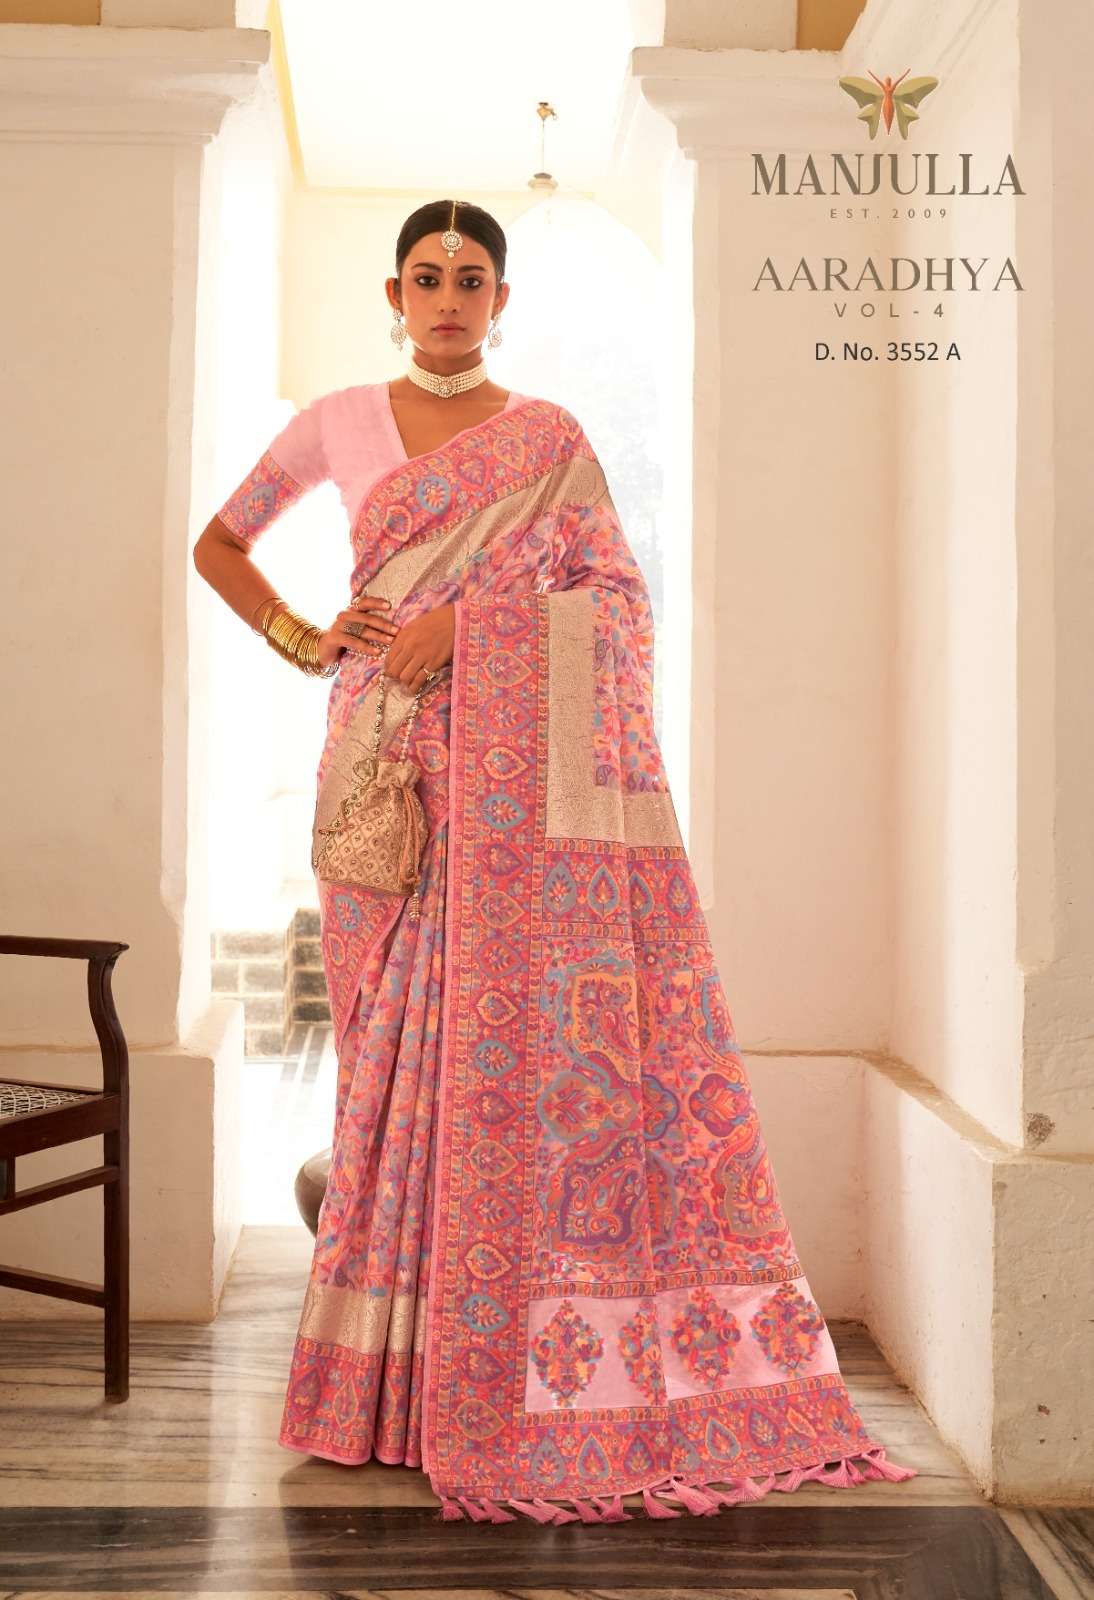 aaradhya vol 4 by manjula designer function wear saree collection